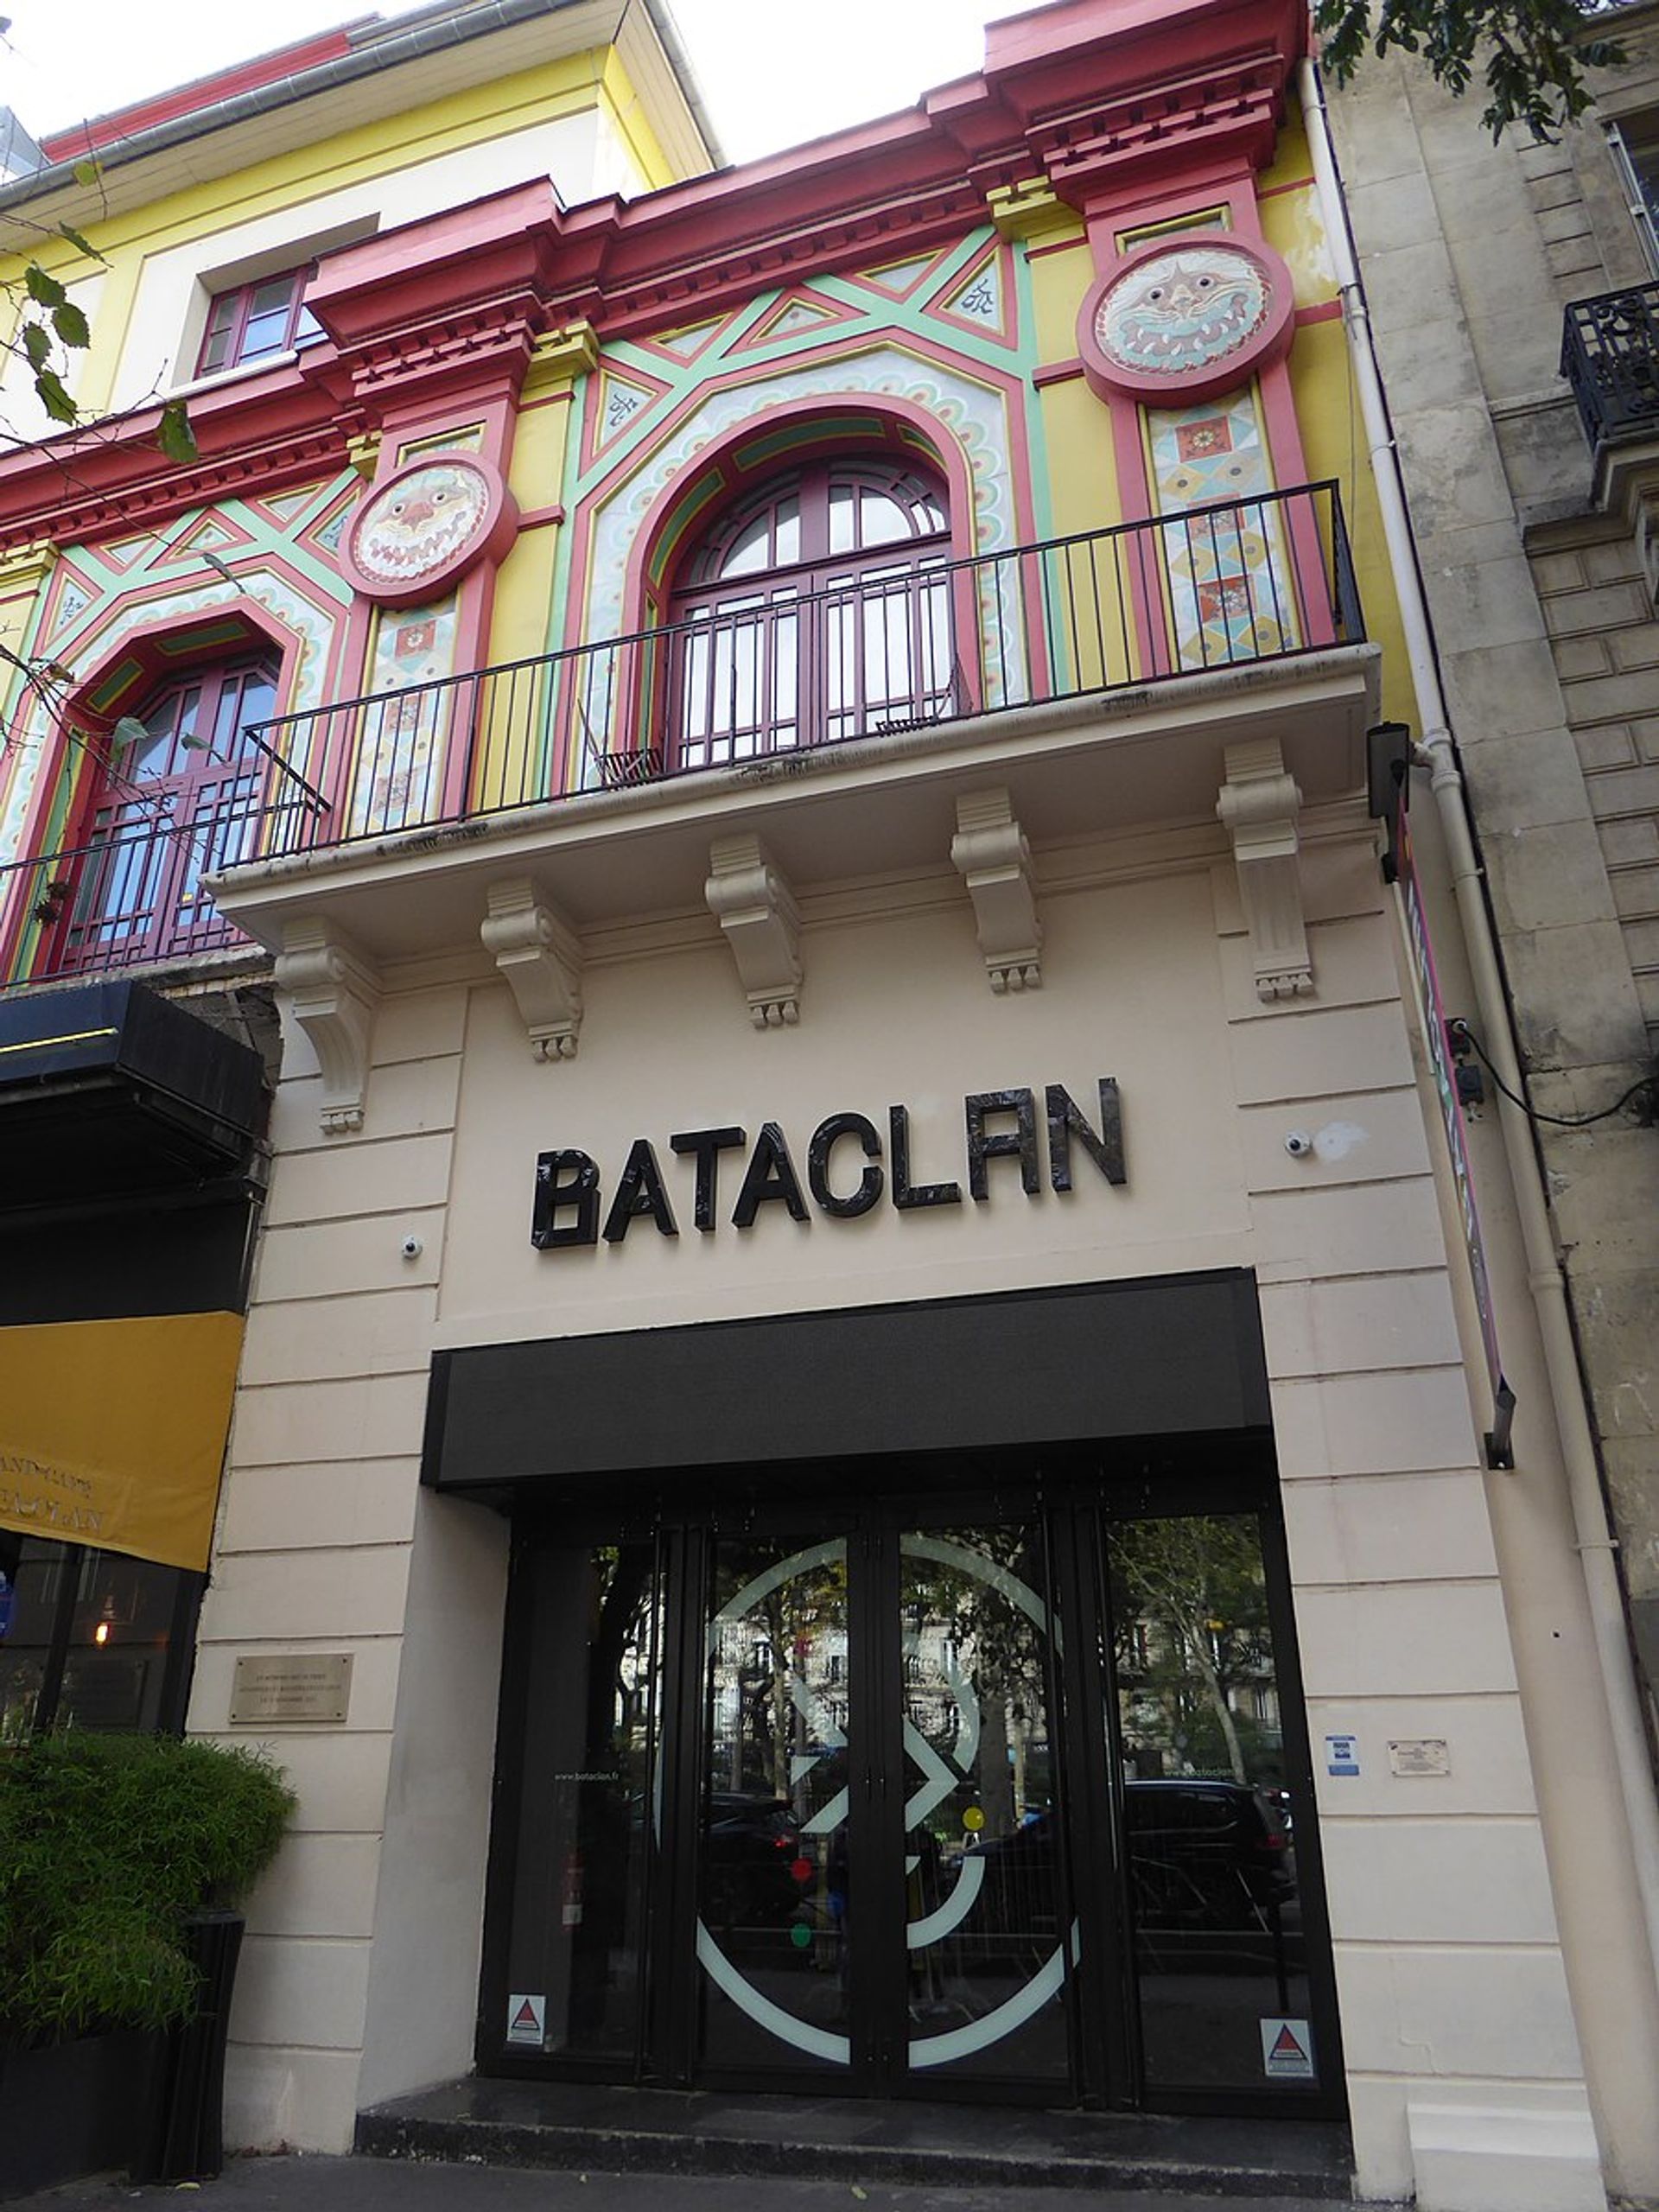 The Bataclan concert hall in Paris Photo via Wikimedia Commons